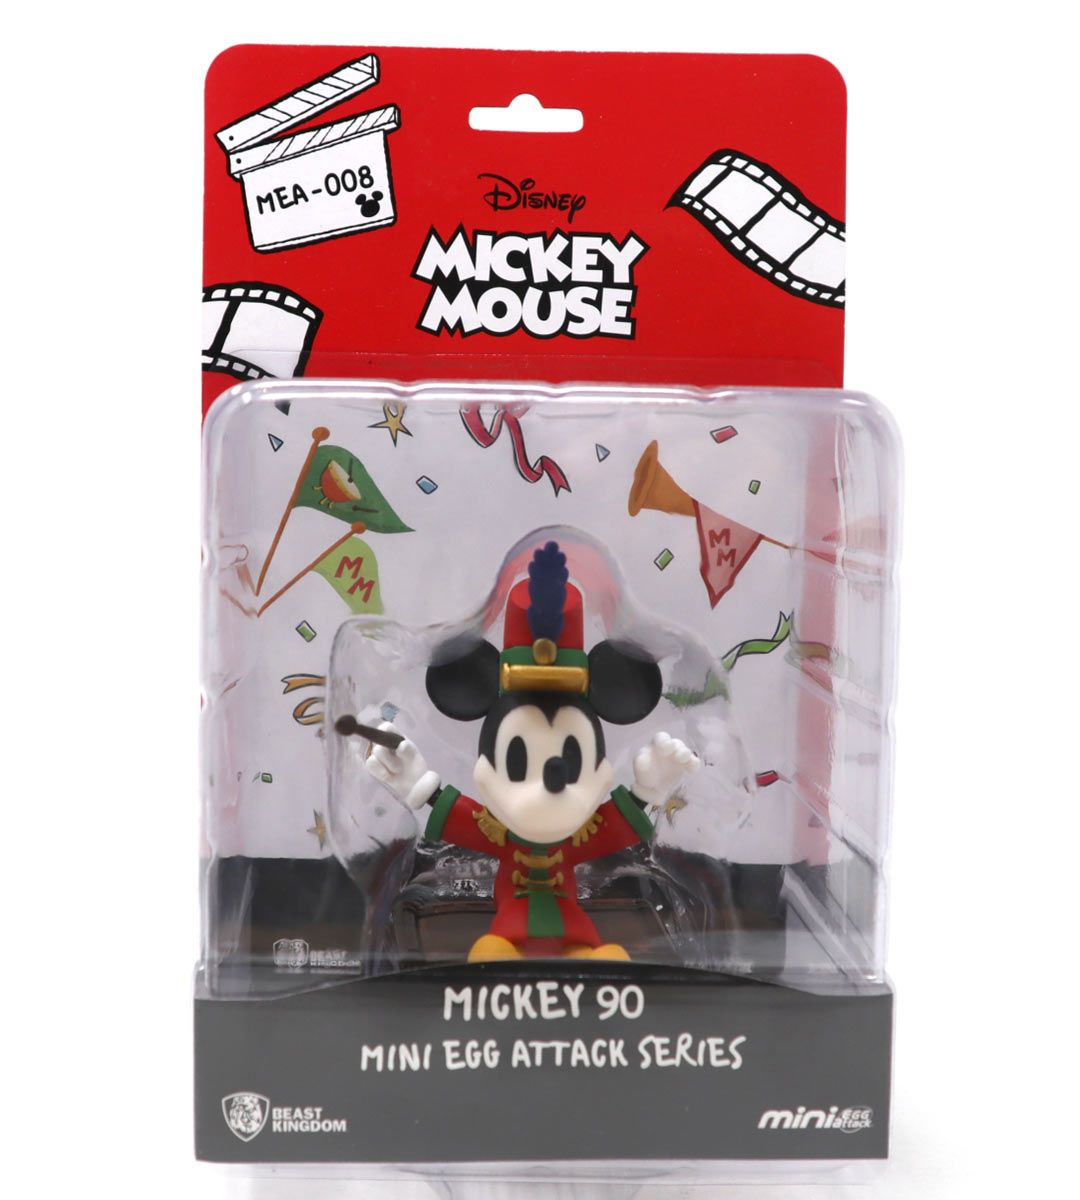 Mini Egg Attack Series - Conductor Mickey 90 (Mickey Mouse)